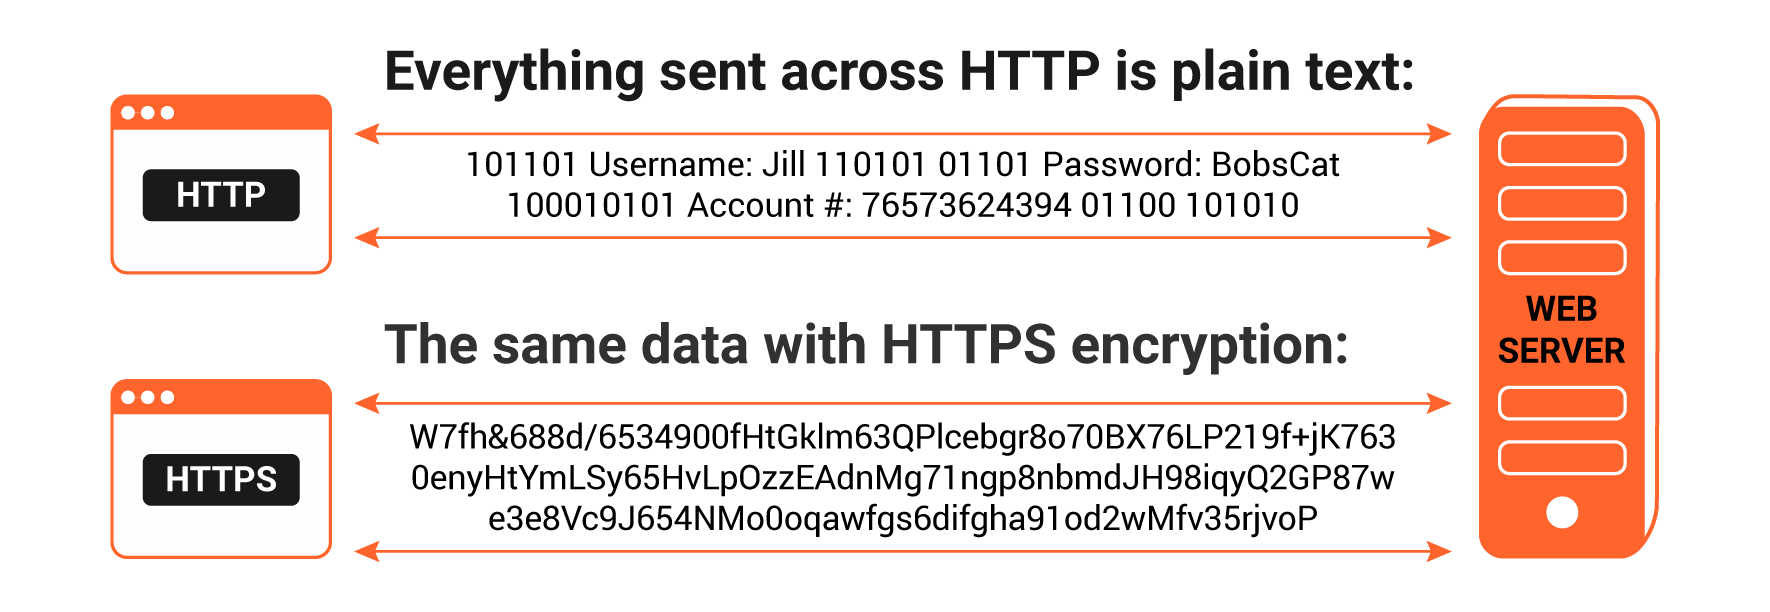 http vs https encryption graph